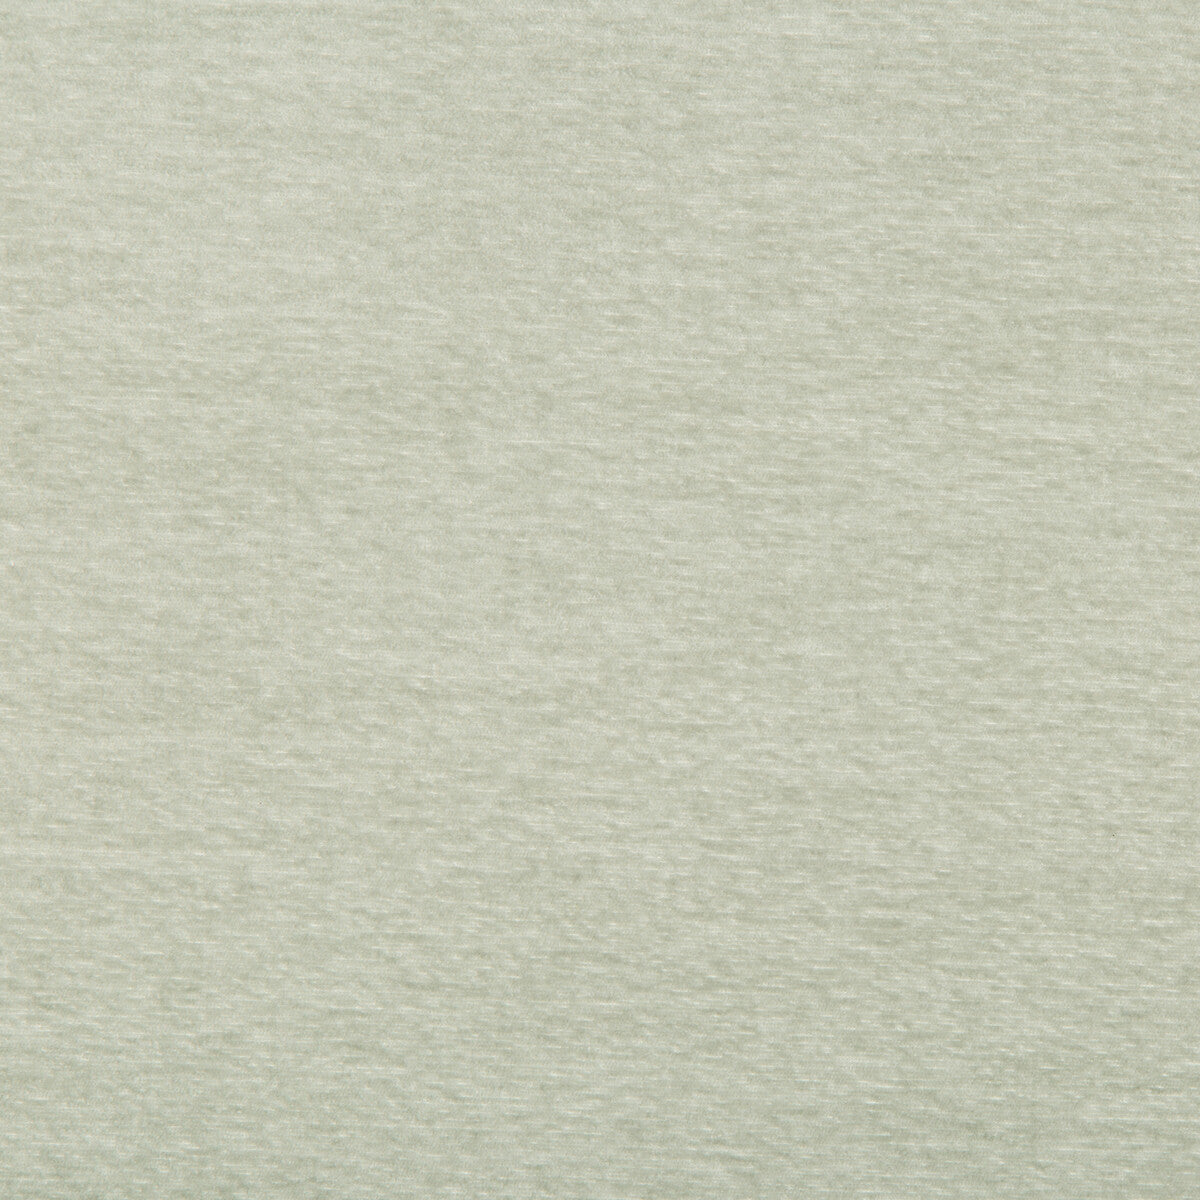 Kravet Smart fabric in 35323-23 color - pattern 35323.23.0 - by Kravet Smart in the Performance Kravetarmor collection